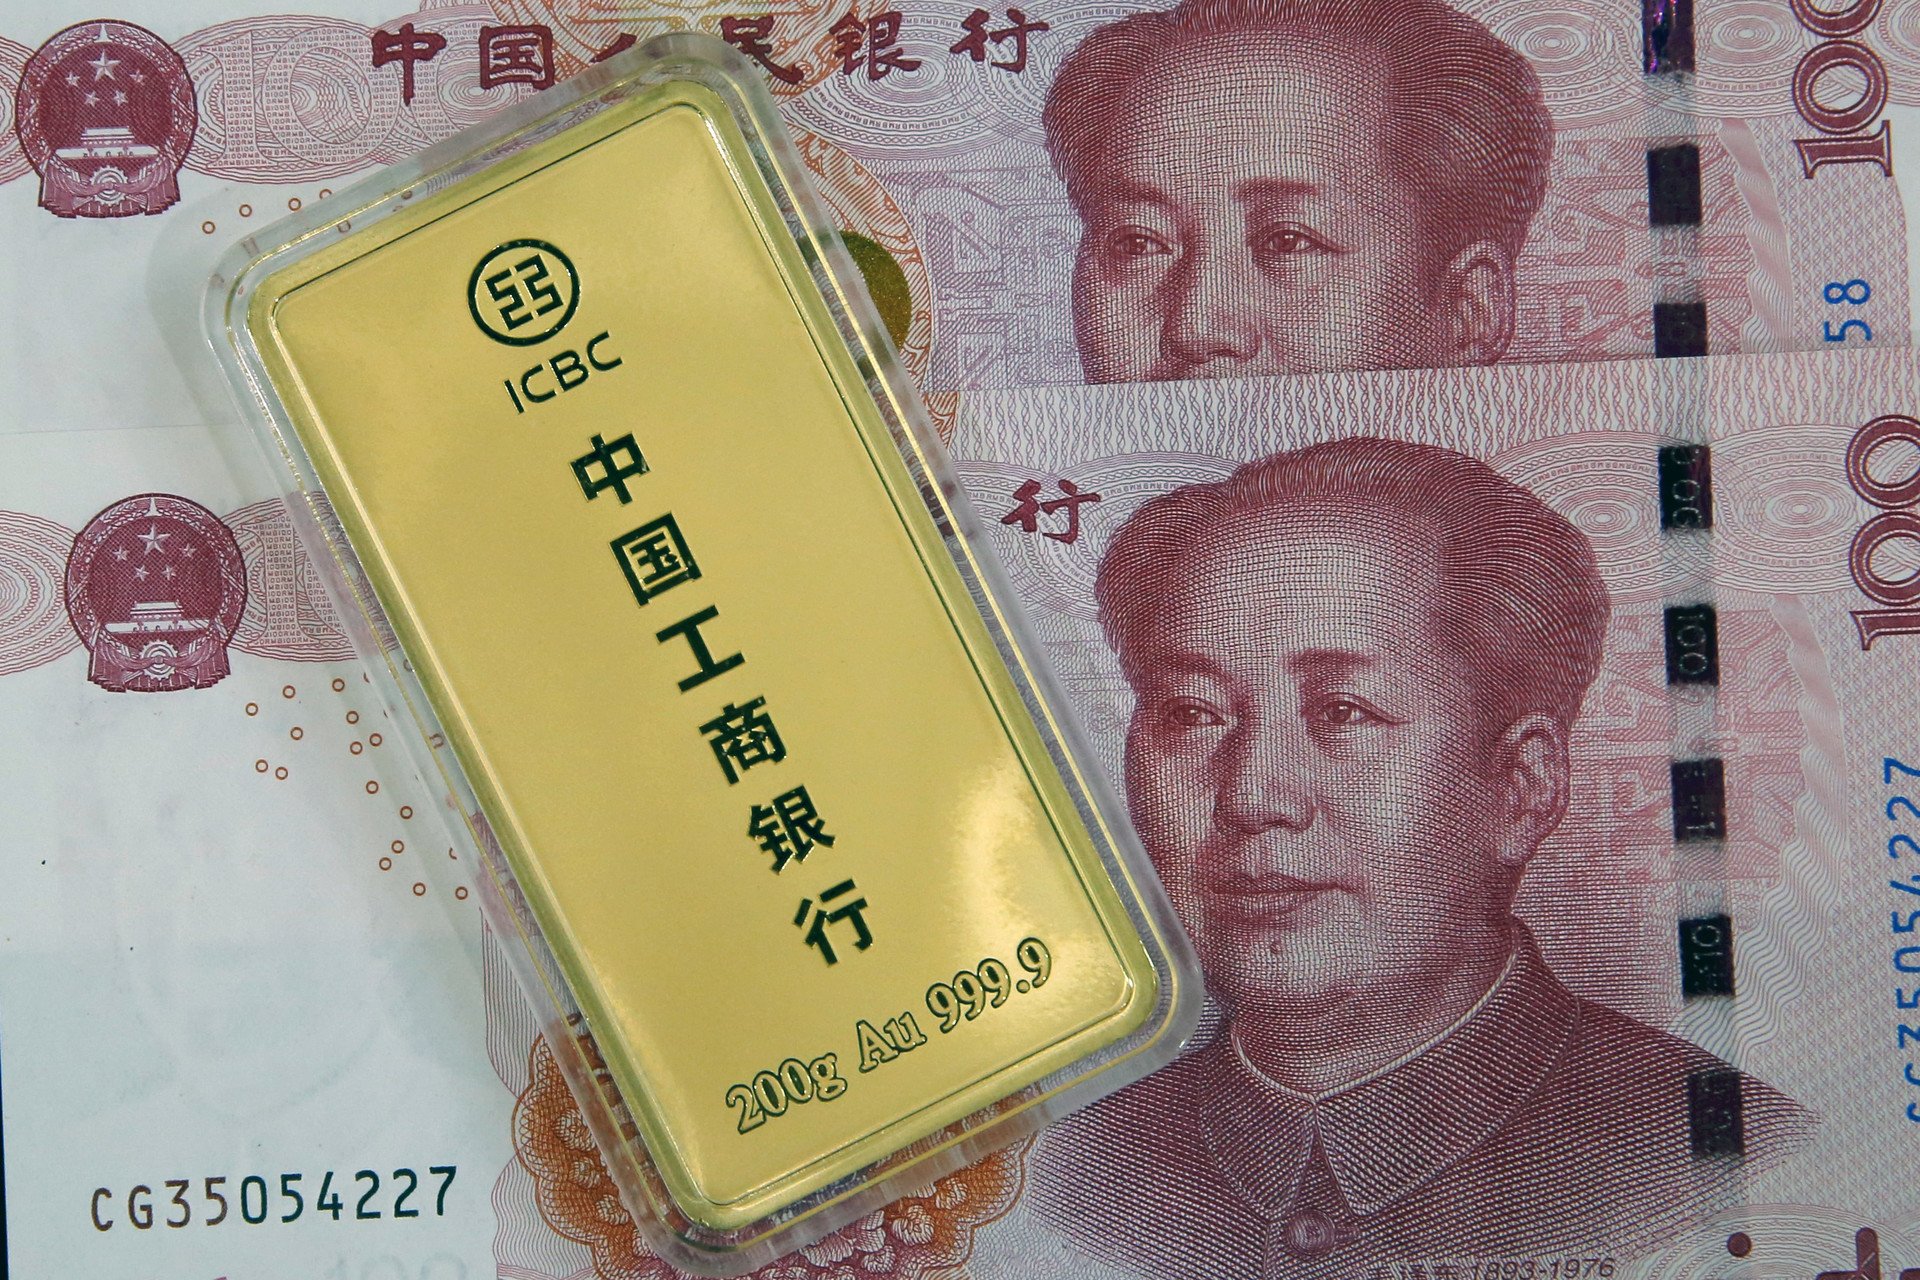 Июань. Юани. Золотой юань. Китайский юань. Китайская валюта и золото.